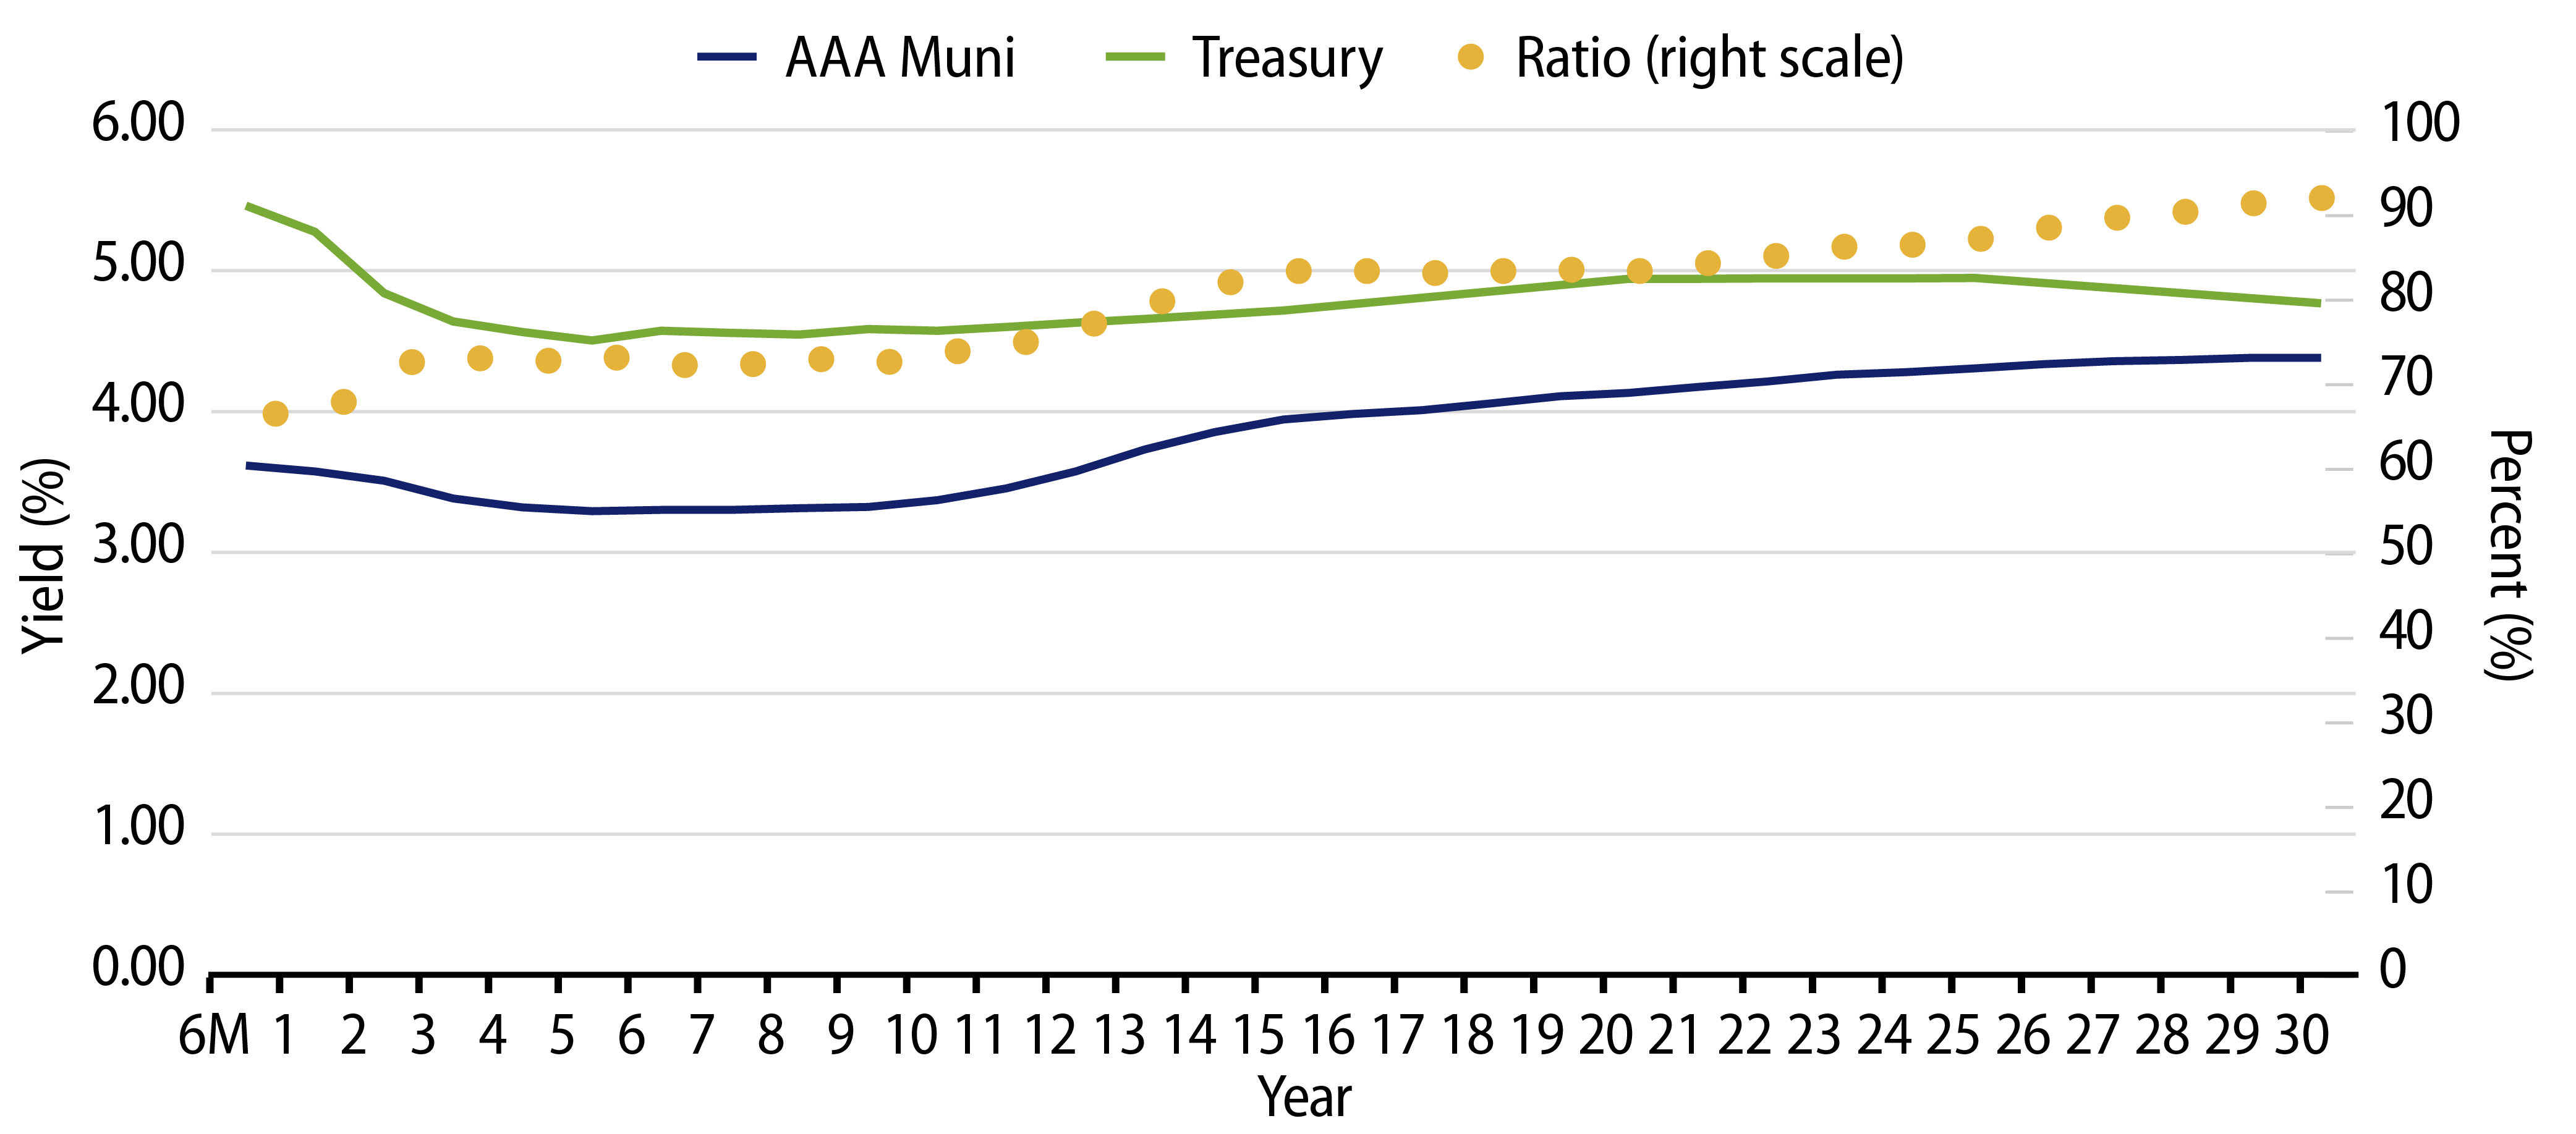 Explore AAA Municipal vs. Treasury Yield Curves